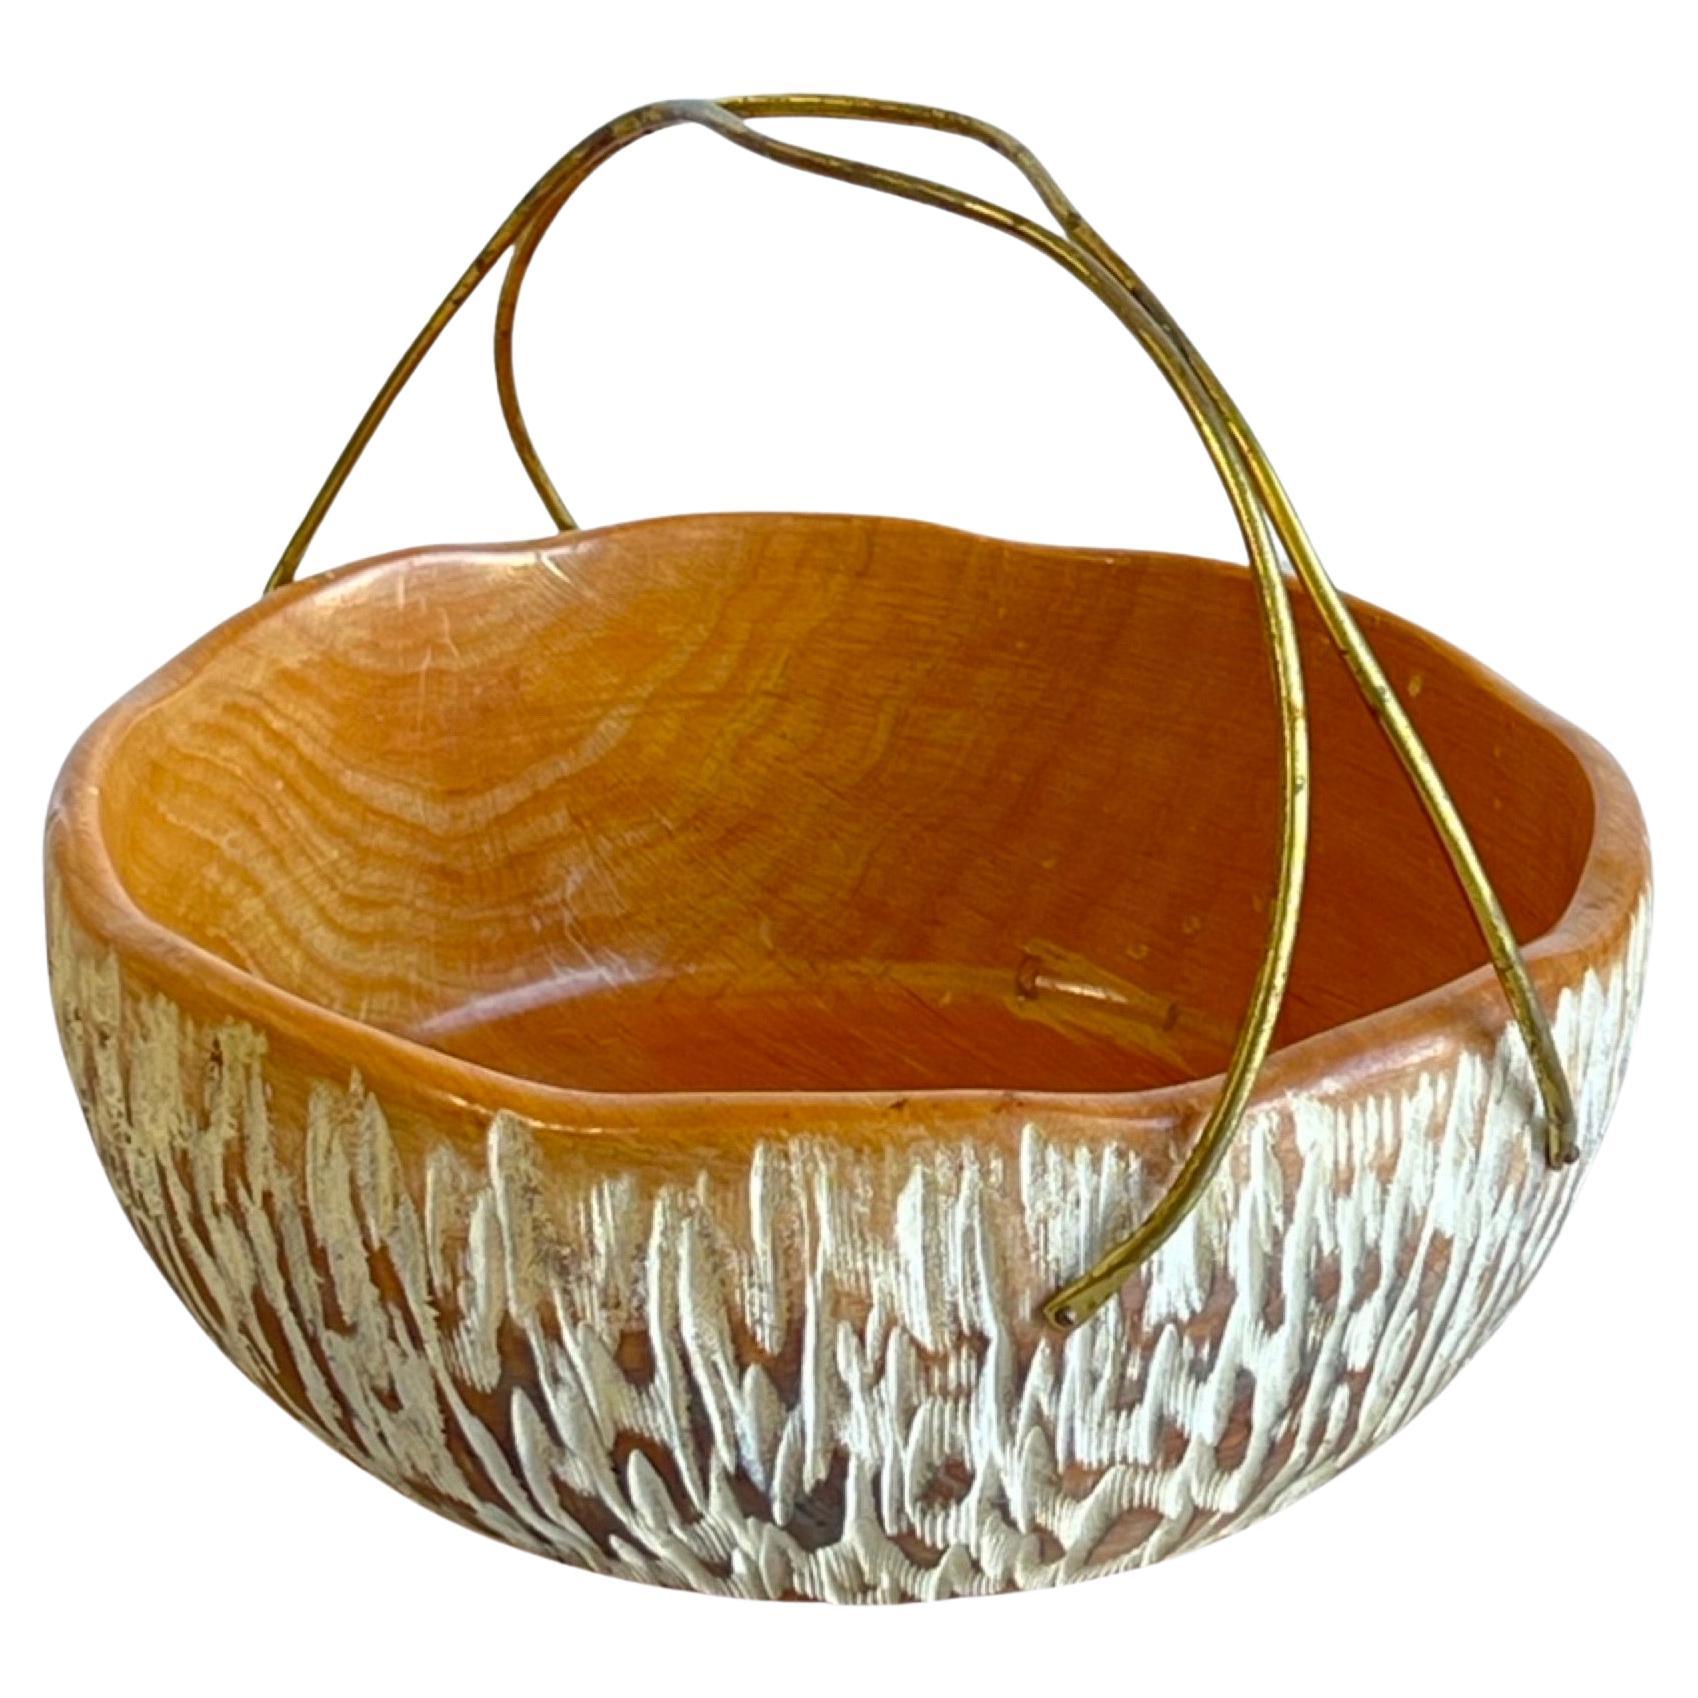 Aldo Tura for Macabo Cusano Carved Bowl